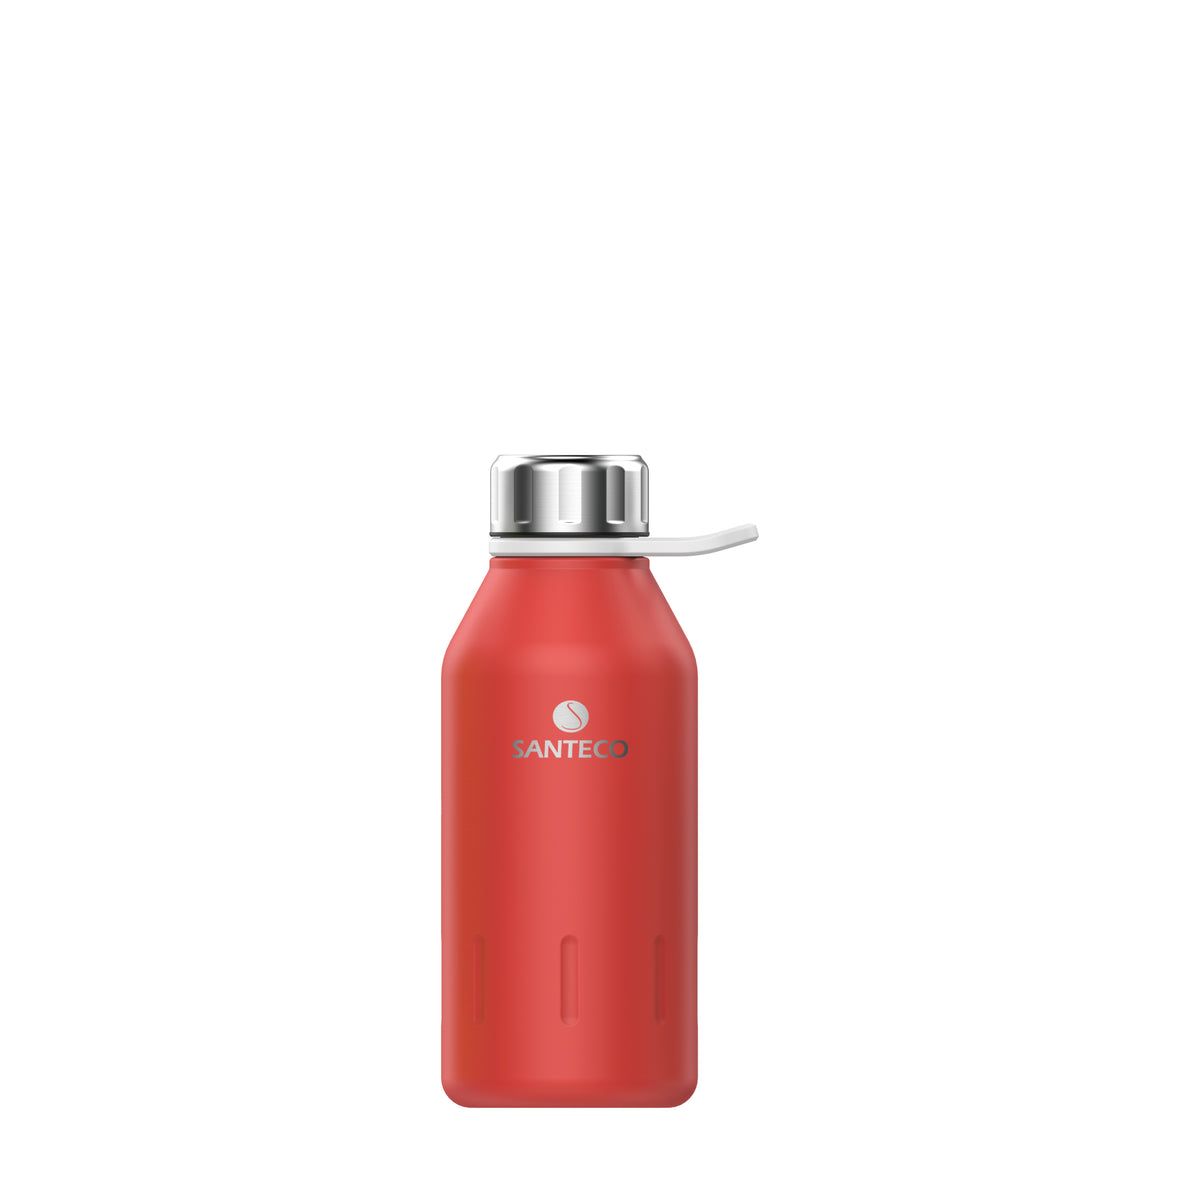 SANTECO Kola Beverage Bottle, 12 oz, Stainless Steel, Vacuum Insulated